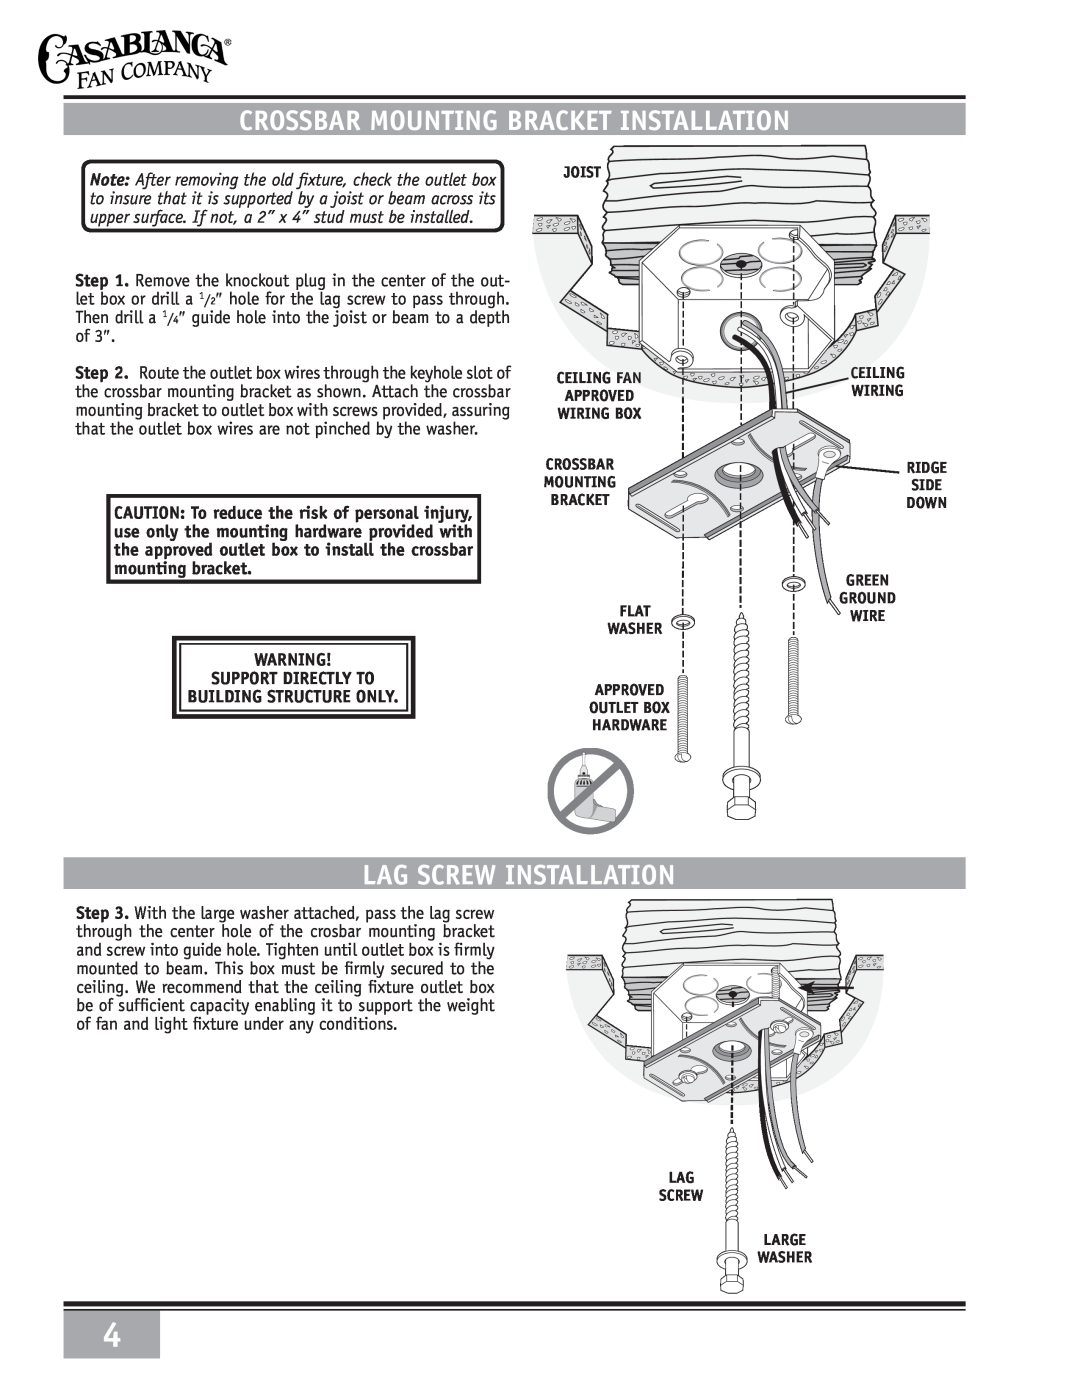 Casablanca Fan Company 69xxD warranty crossbar mounting bracket INSTALLATION, Lag Screw Installation 